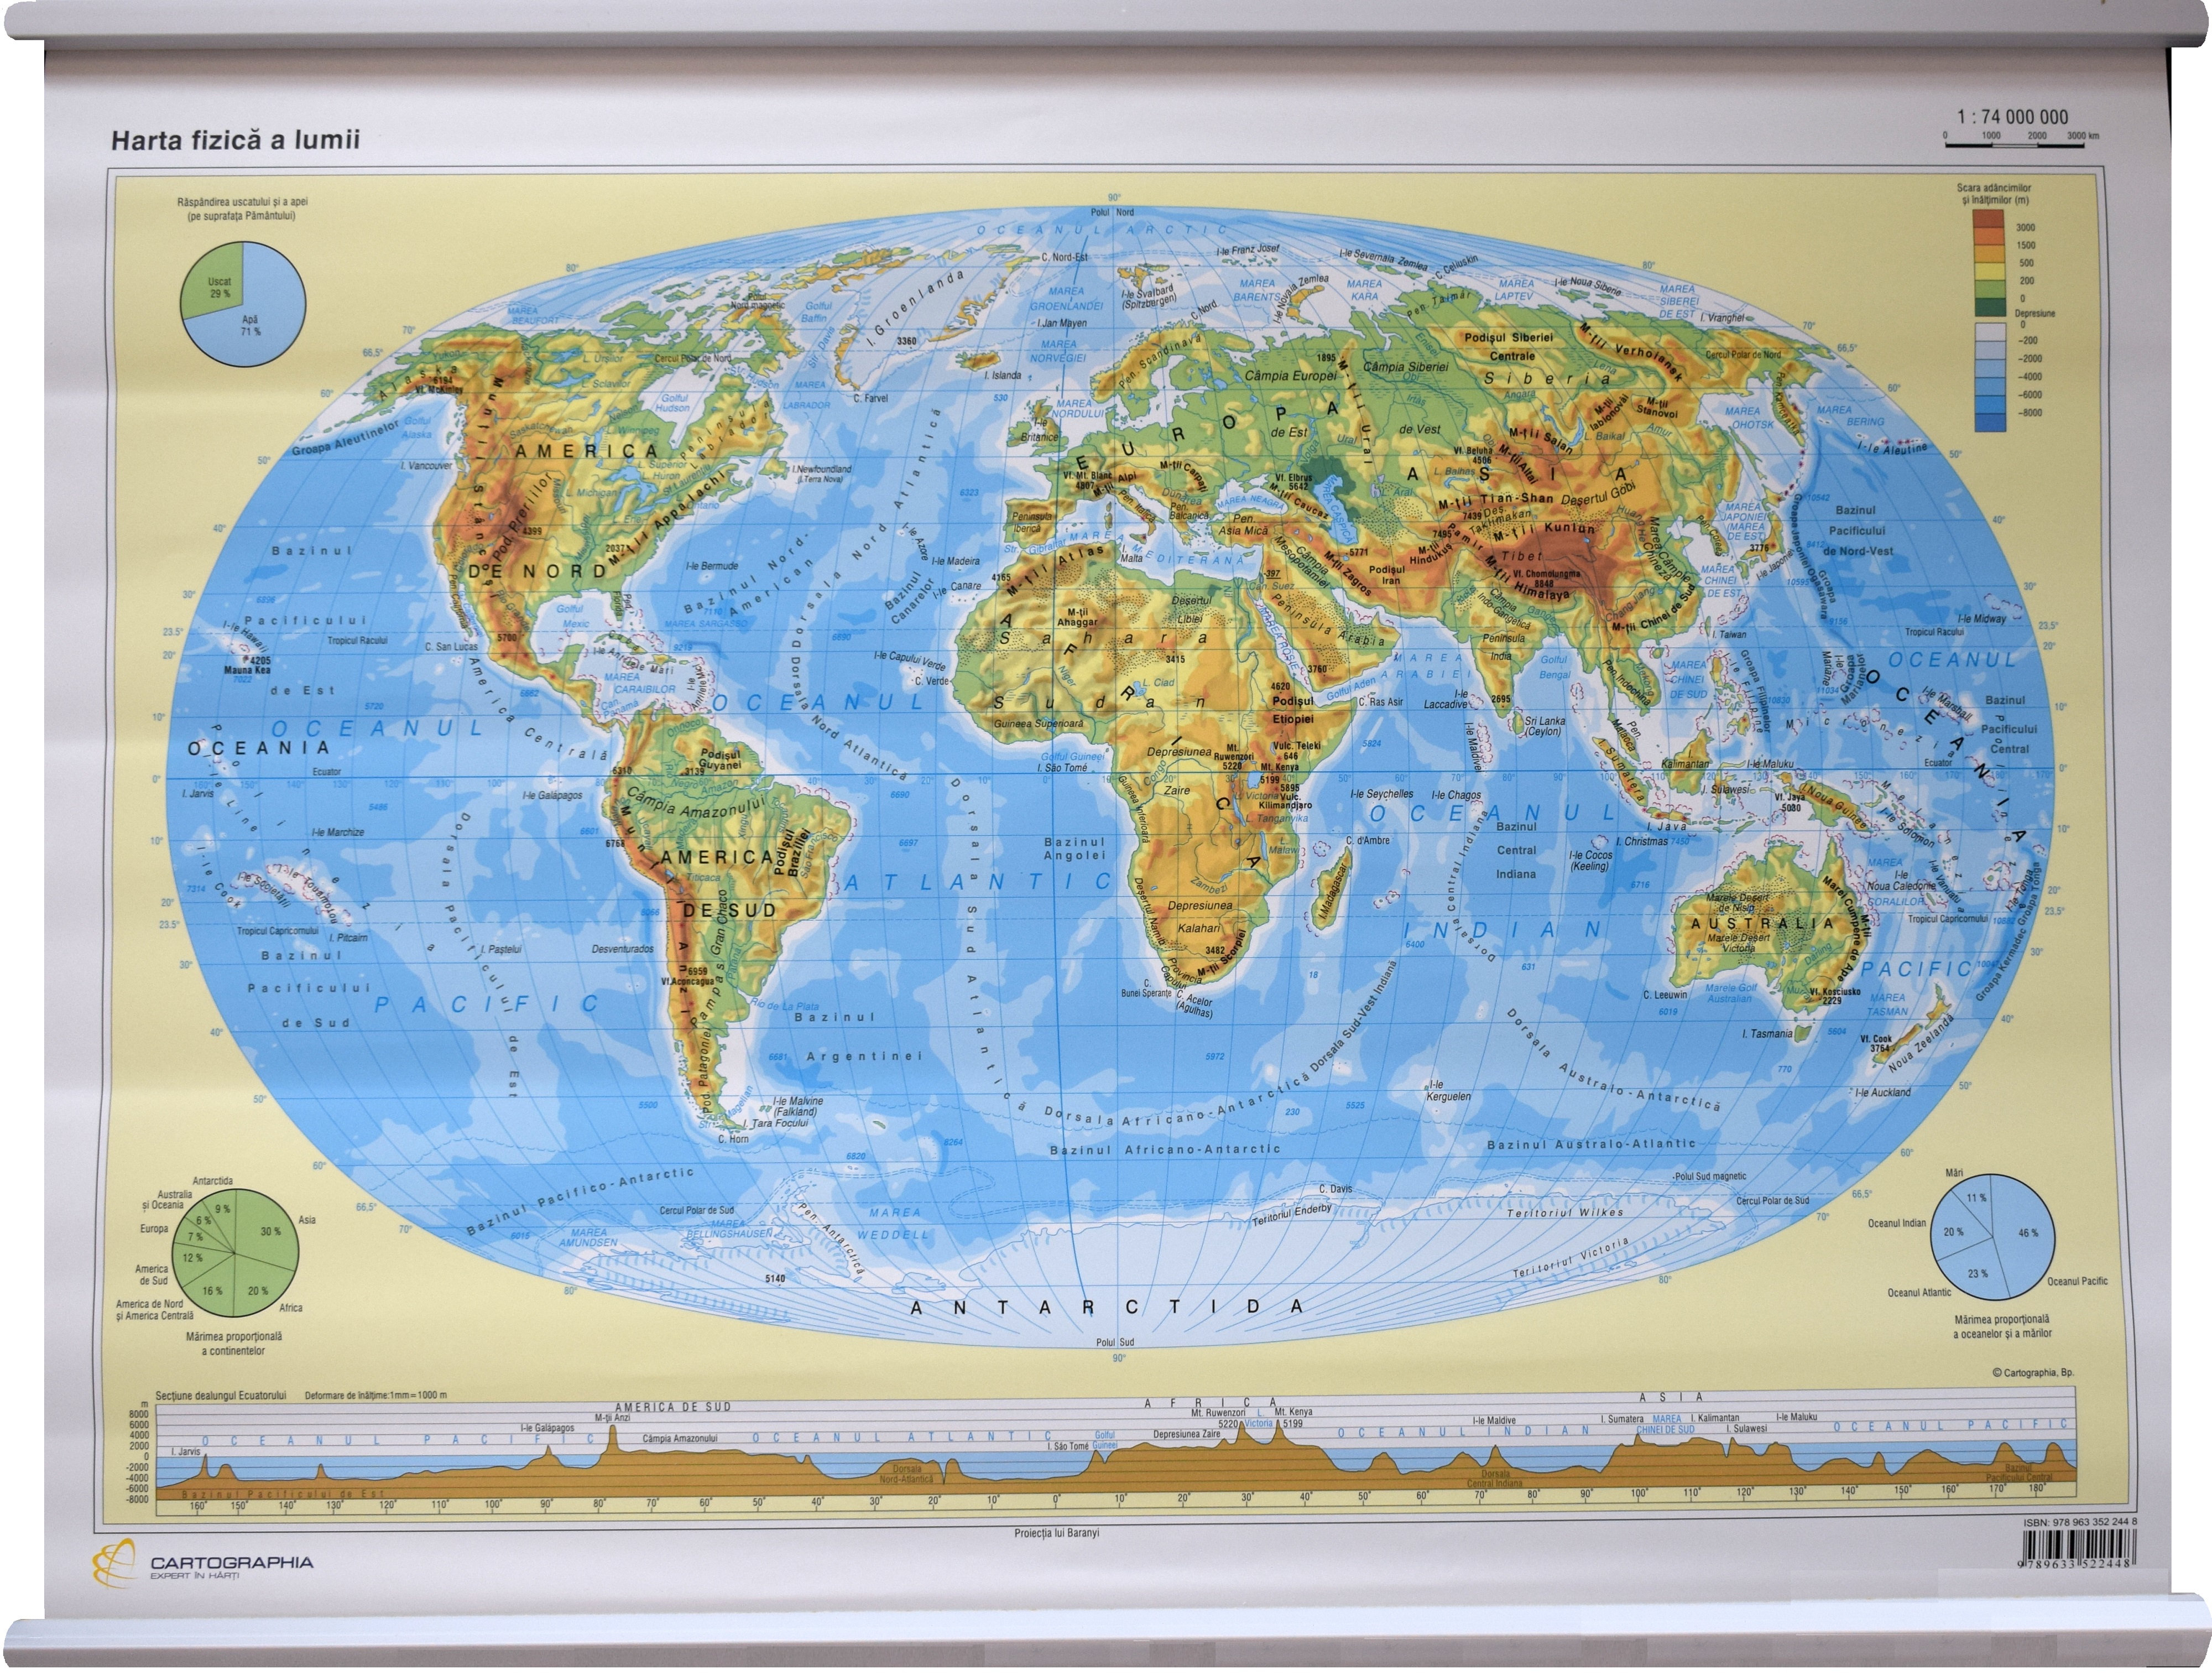 Harta fizica a lumii